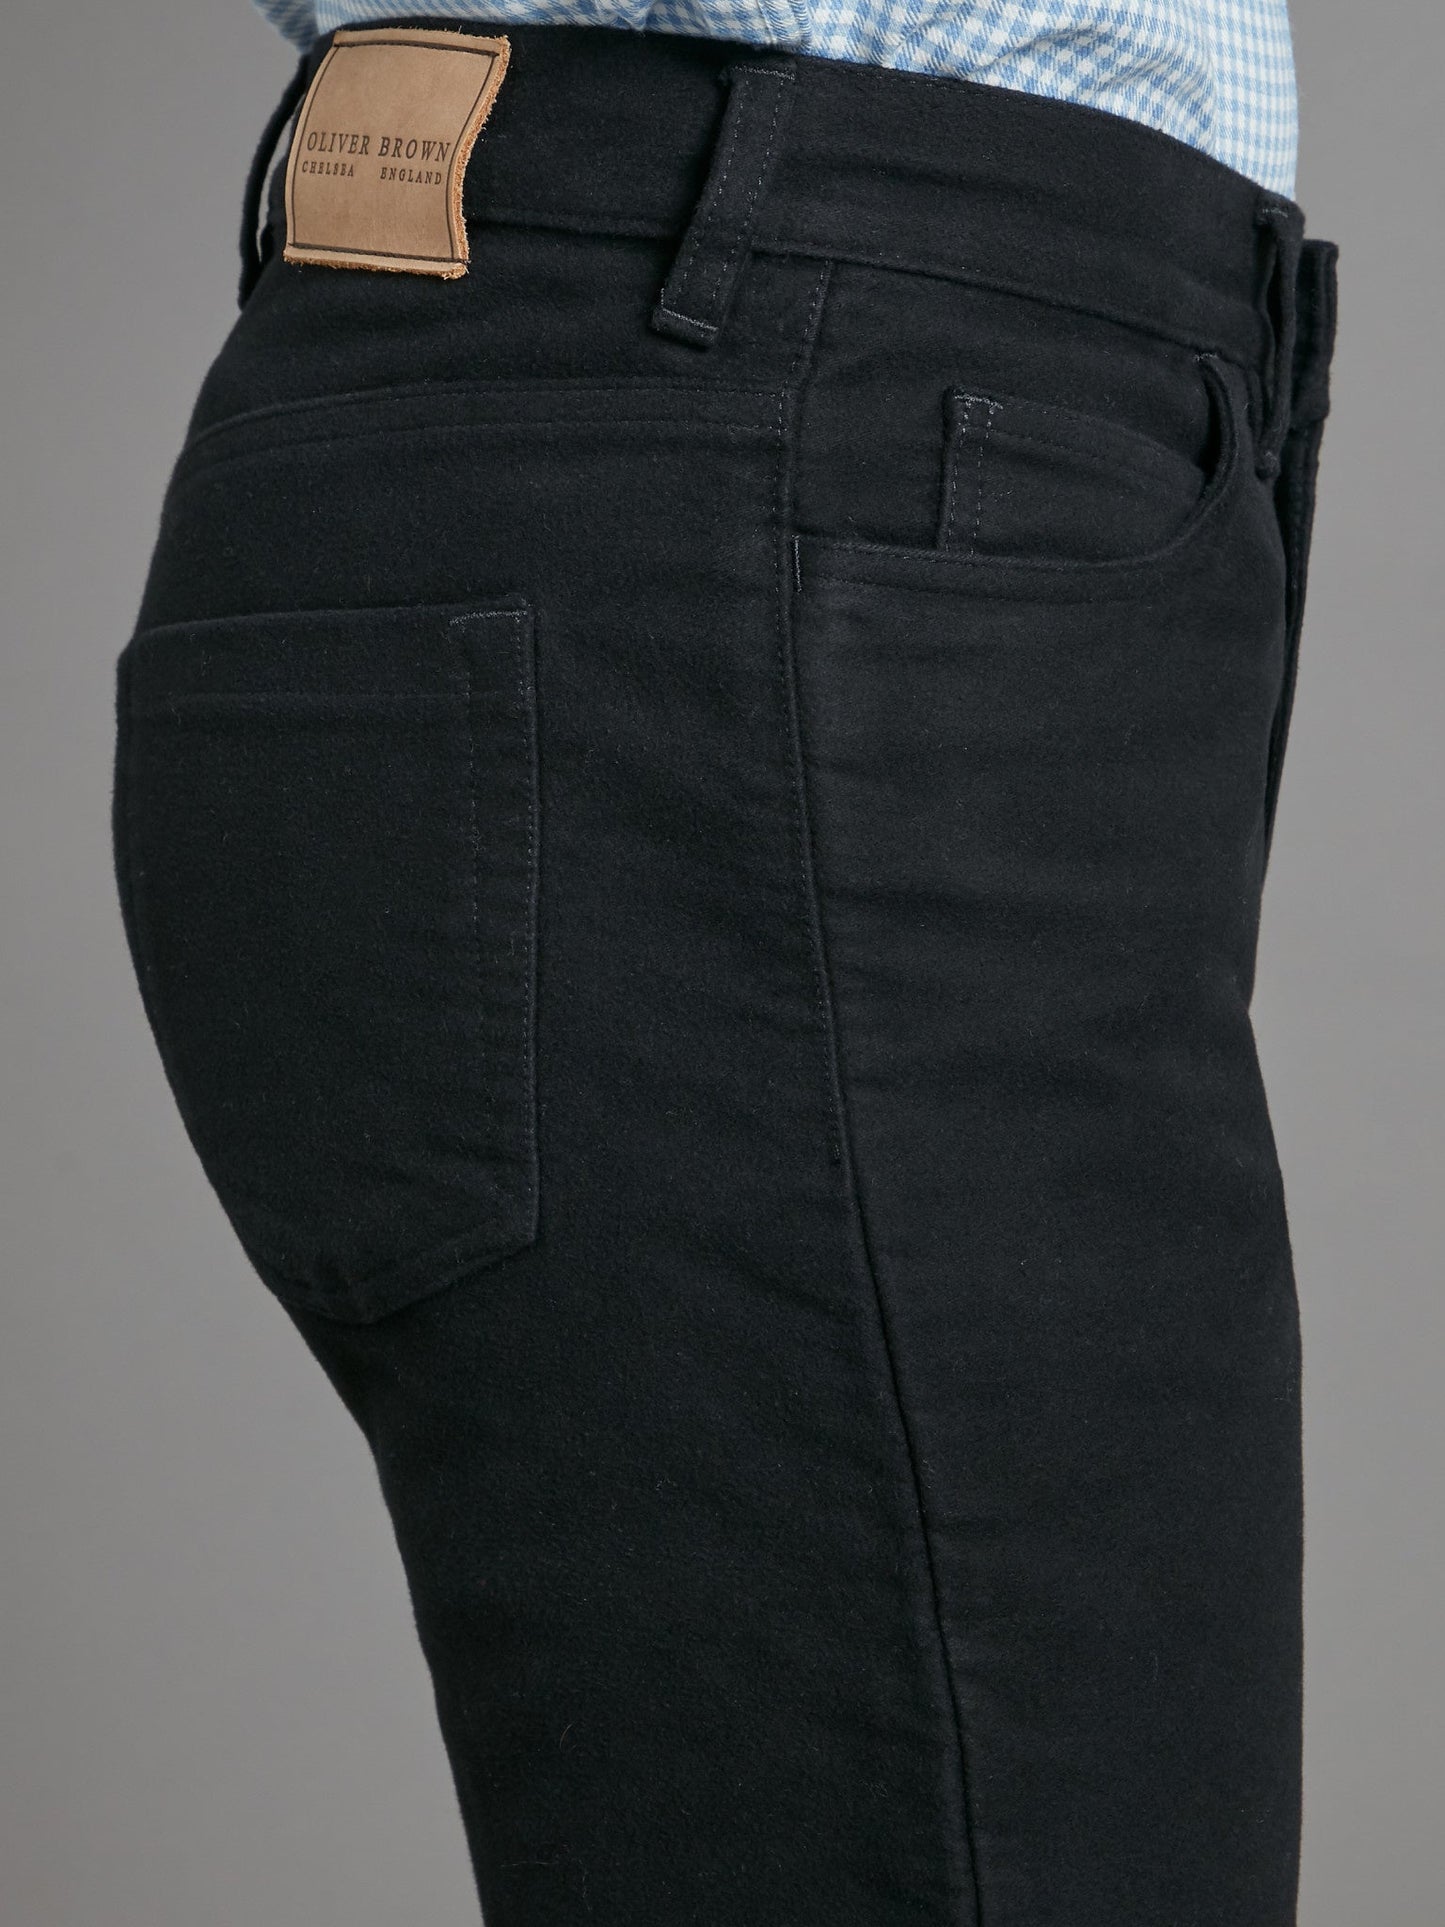 Moleskin Jeans - Pure Black